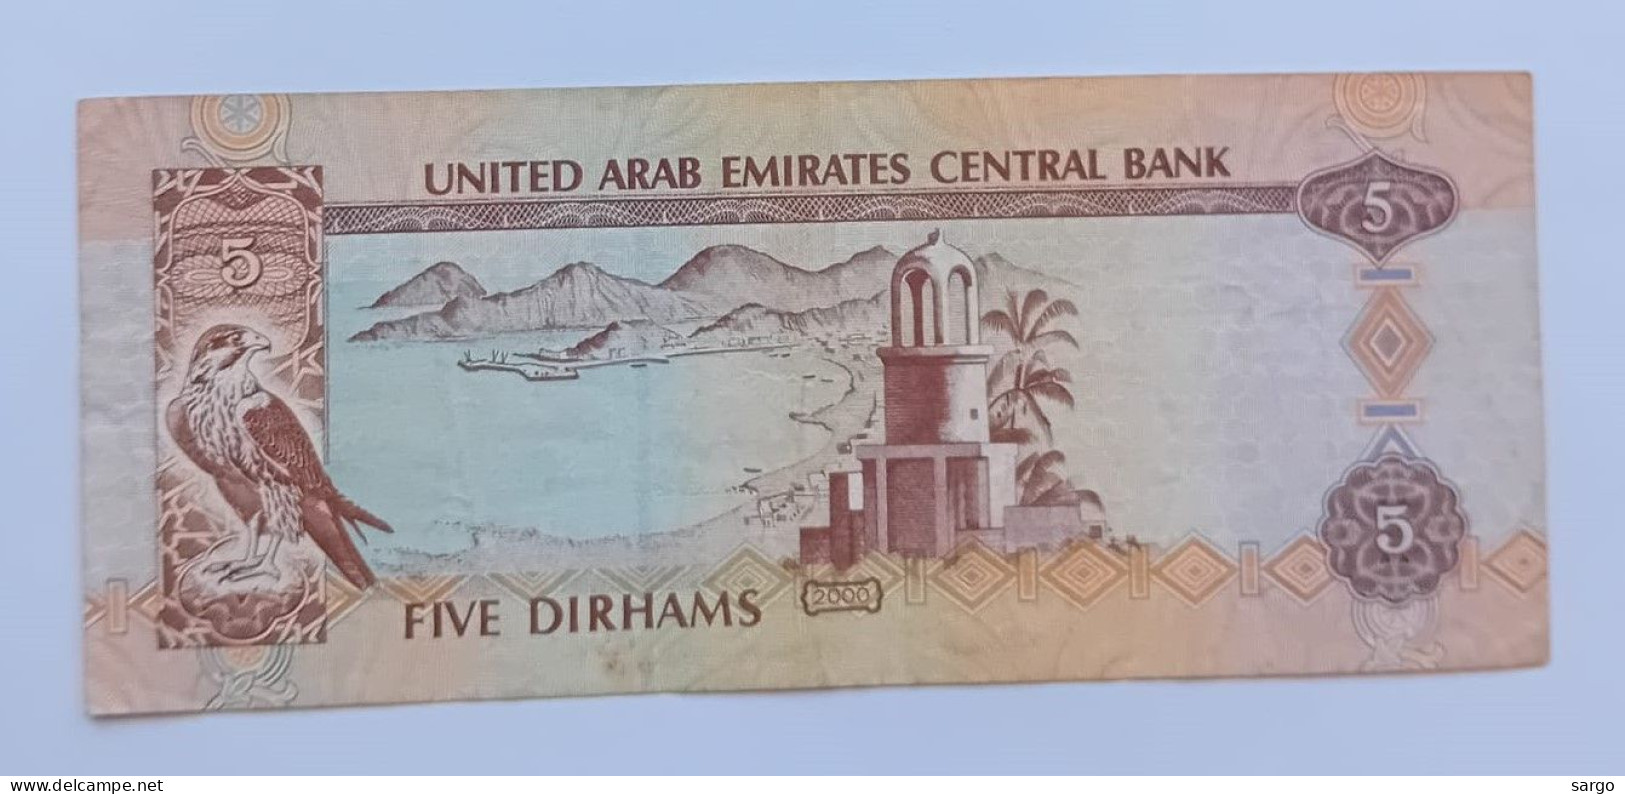 UNITED ARAB EMIRATES - 5 DIRHAMS - 1993-1995 - CIRC P 12 - BANKNOTES - PAPER MONEY - CARTAMONETA - - Verenigde Arabische Emiraten